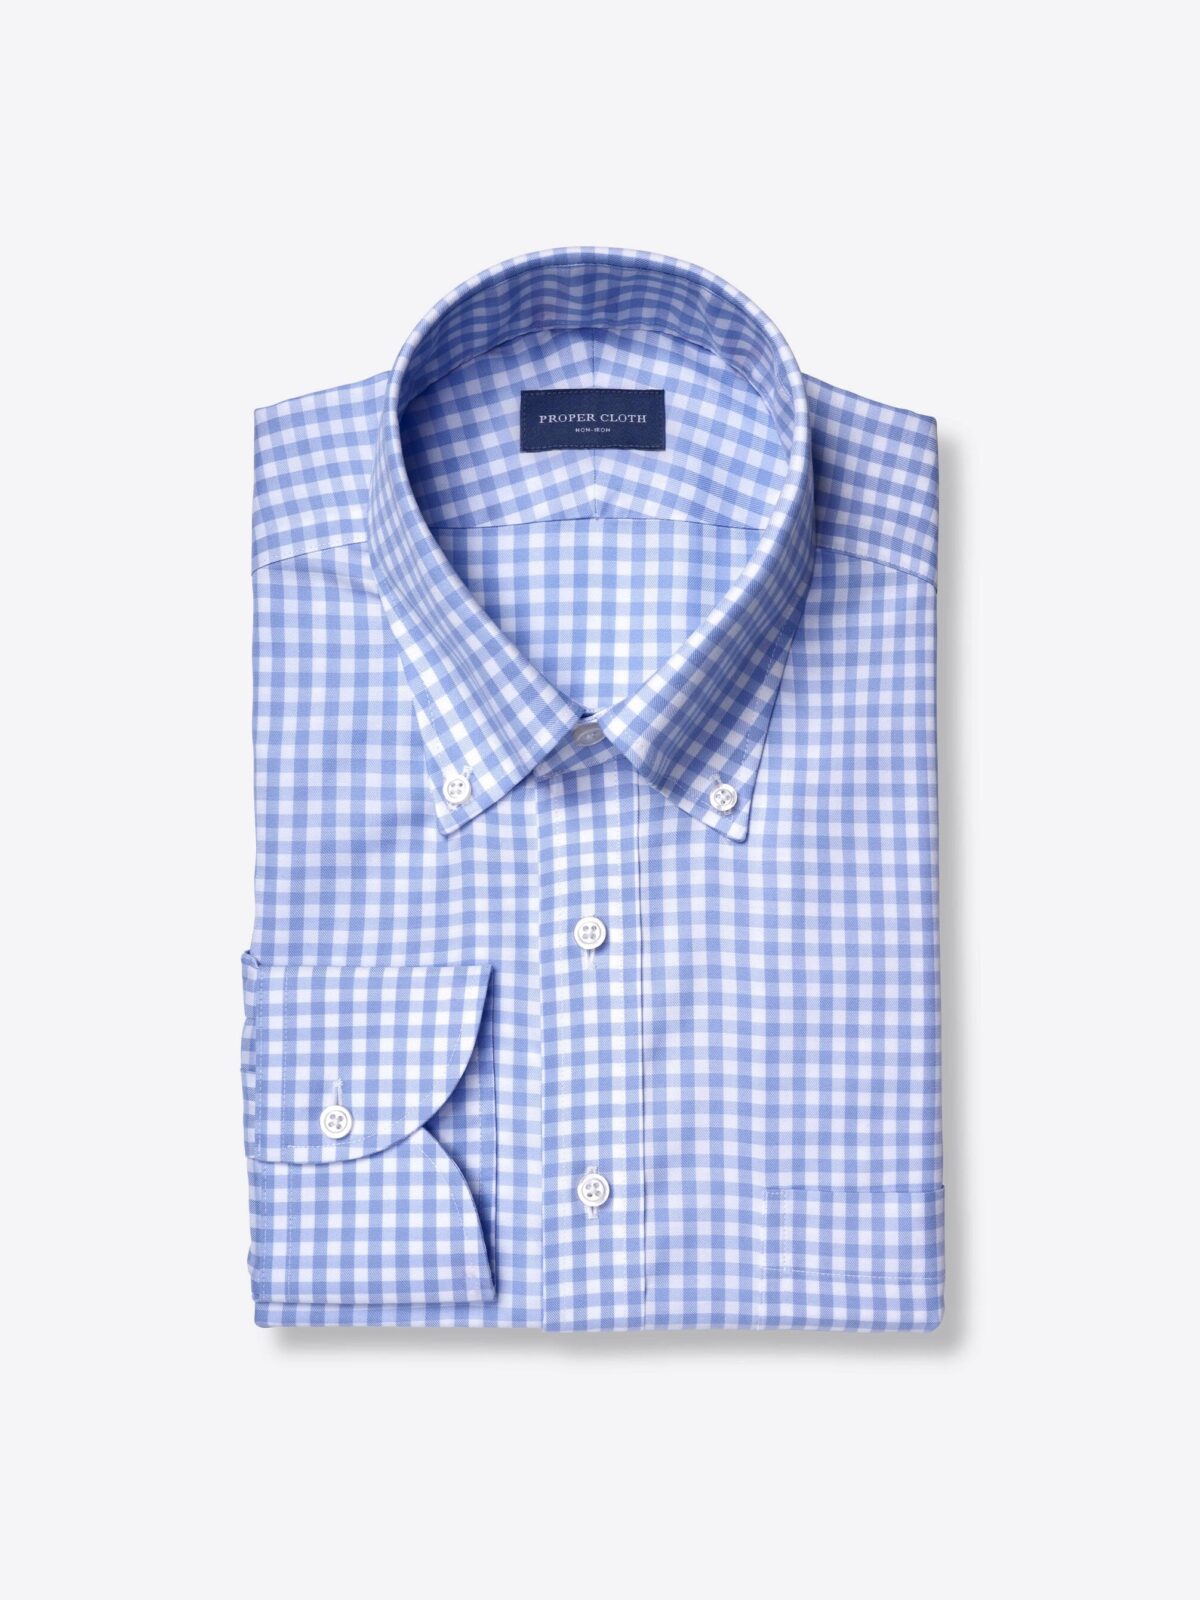 Light Blue Cotton Free Performance Twill Shirts by Proper Cloth